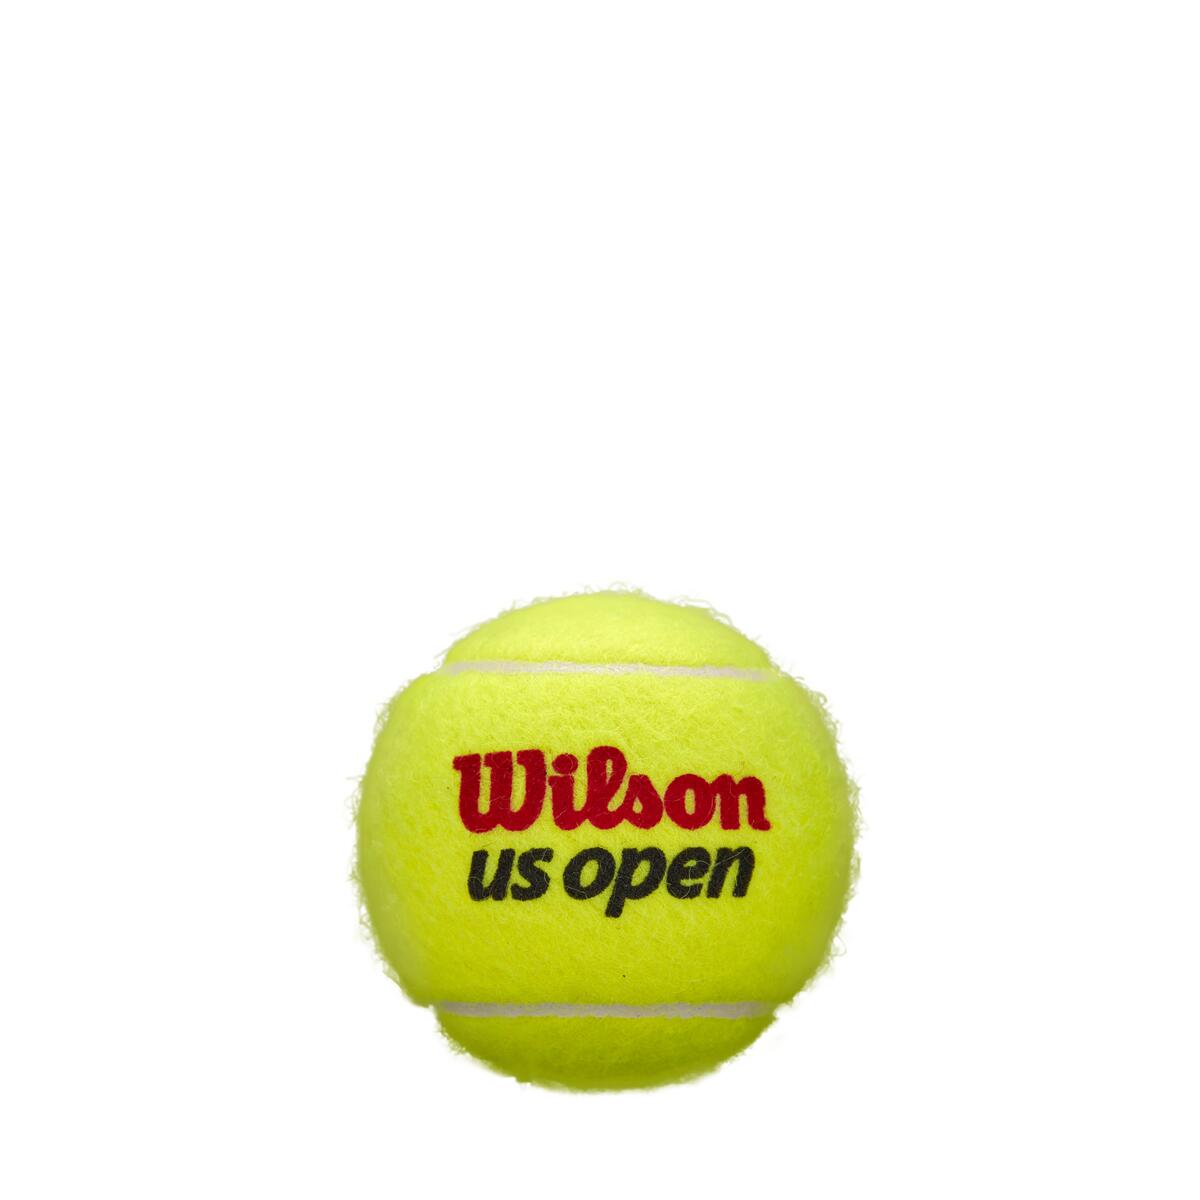 Wilson Us Open Regular Duty - Canette Individuel (3 Balles)